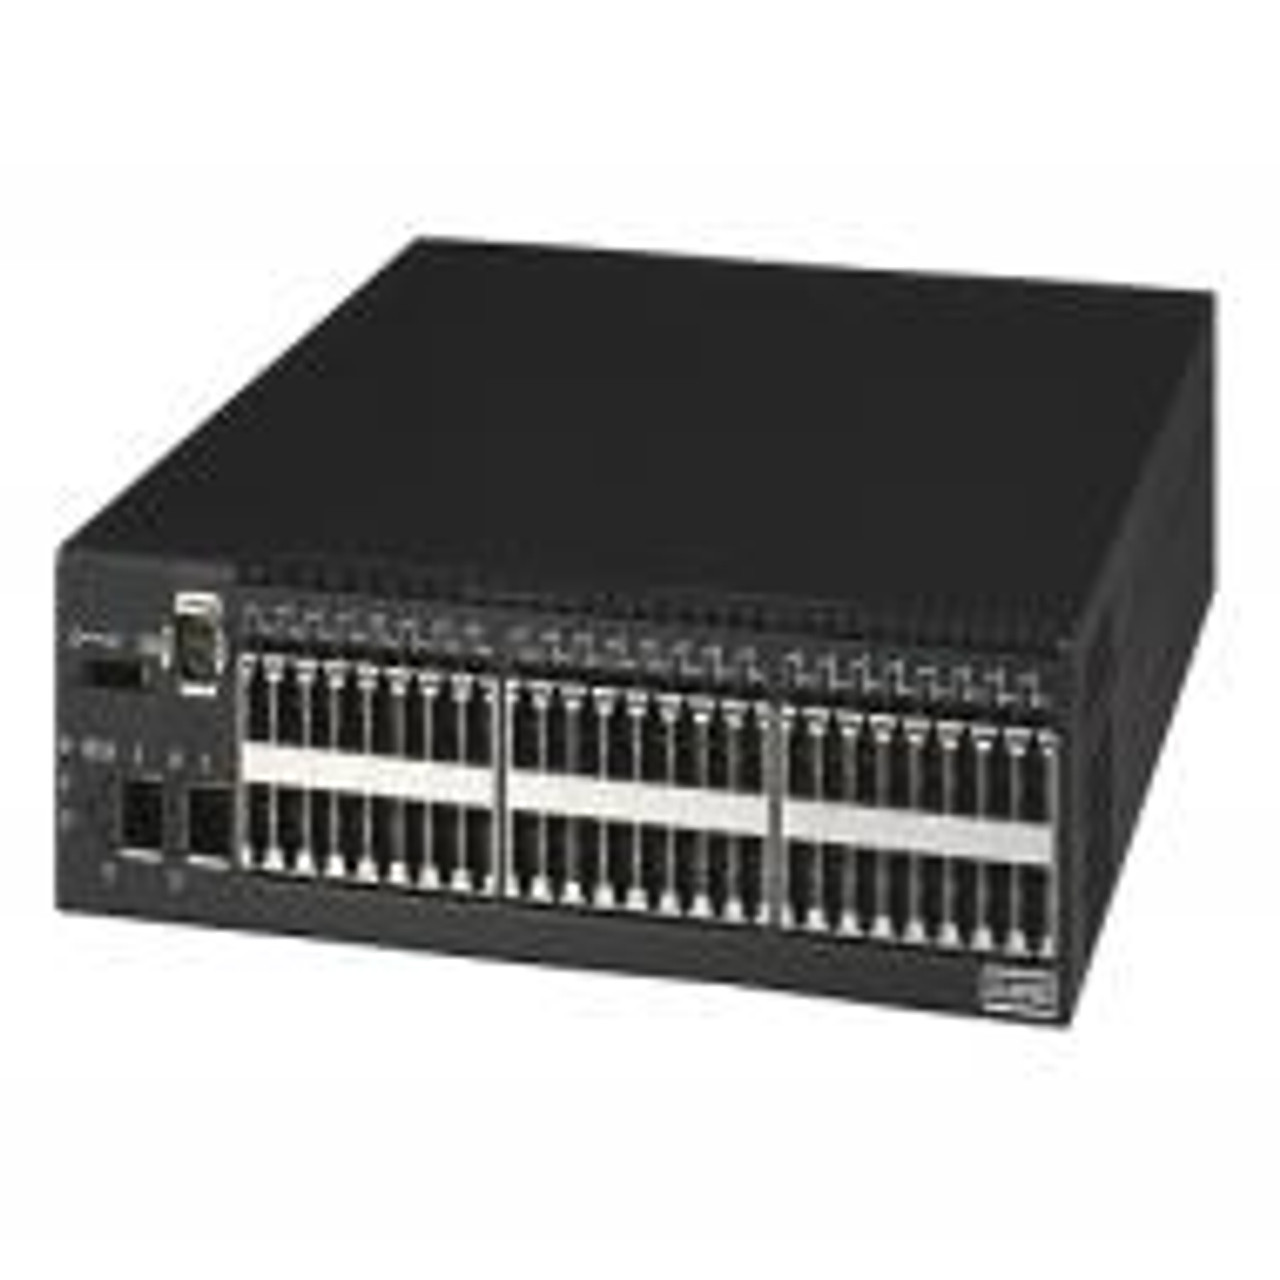 J9727AS | Hp | Procurve 2920-24G 24-Ports Poe+ Managed Gigabit Ethernet Switch